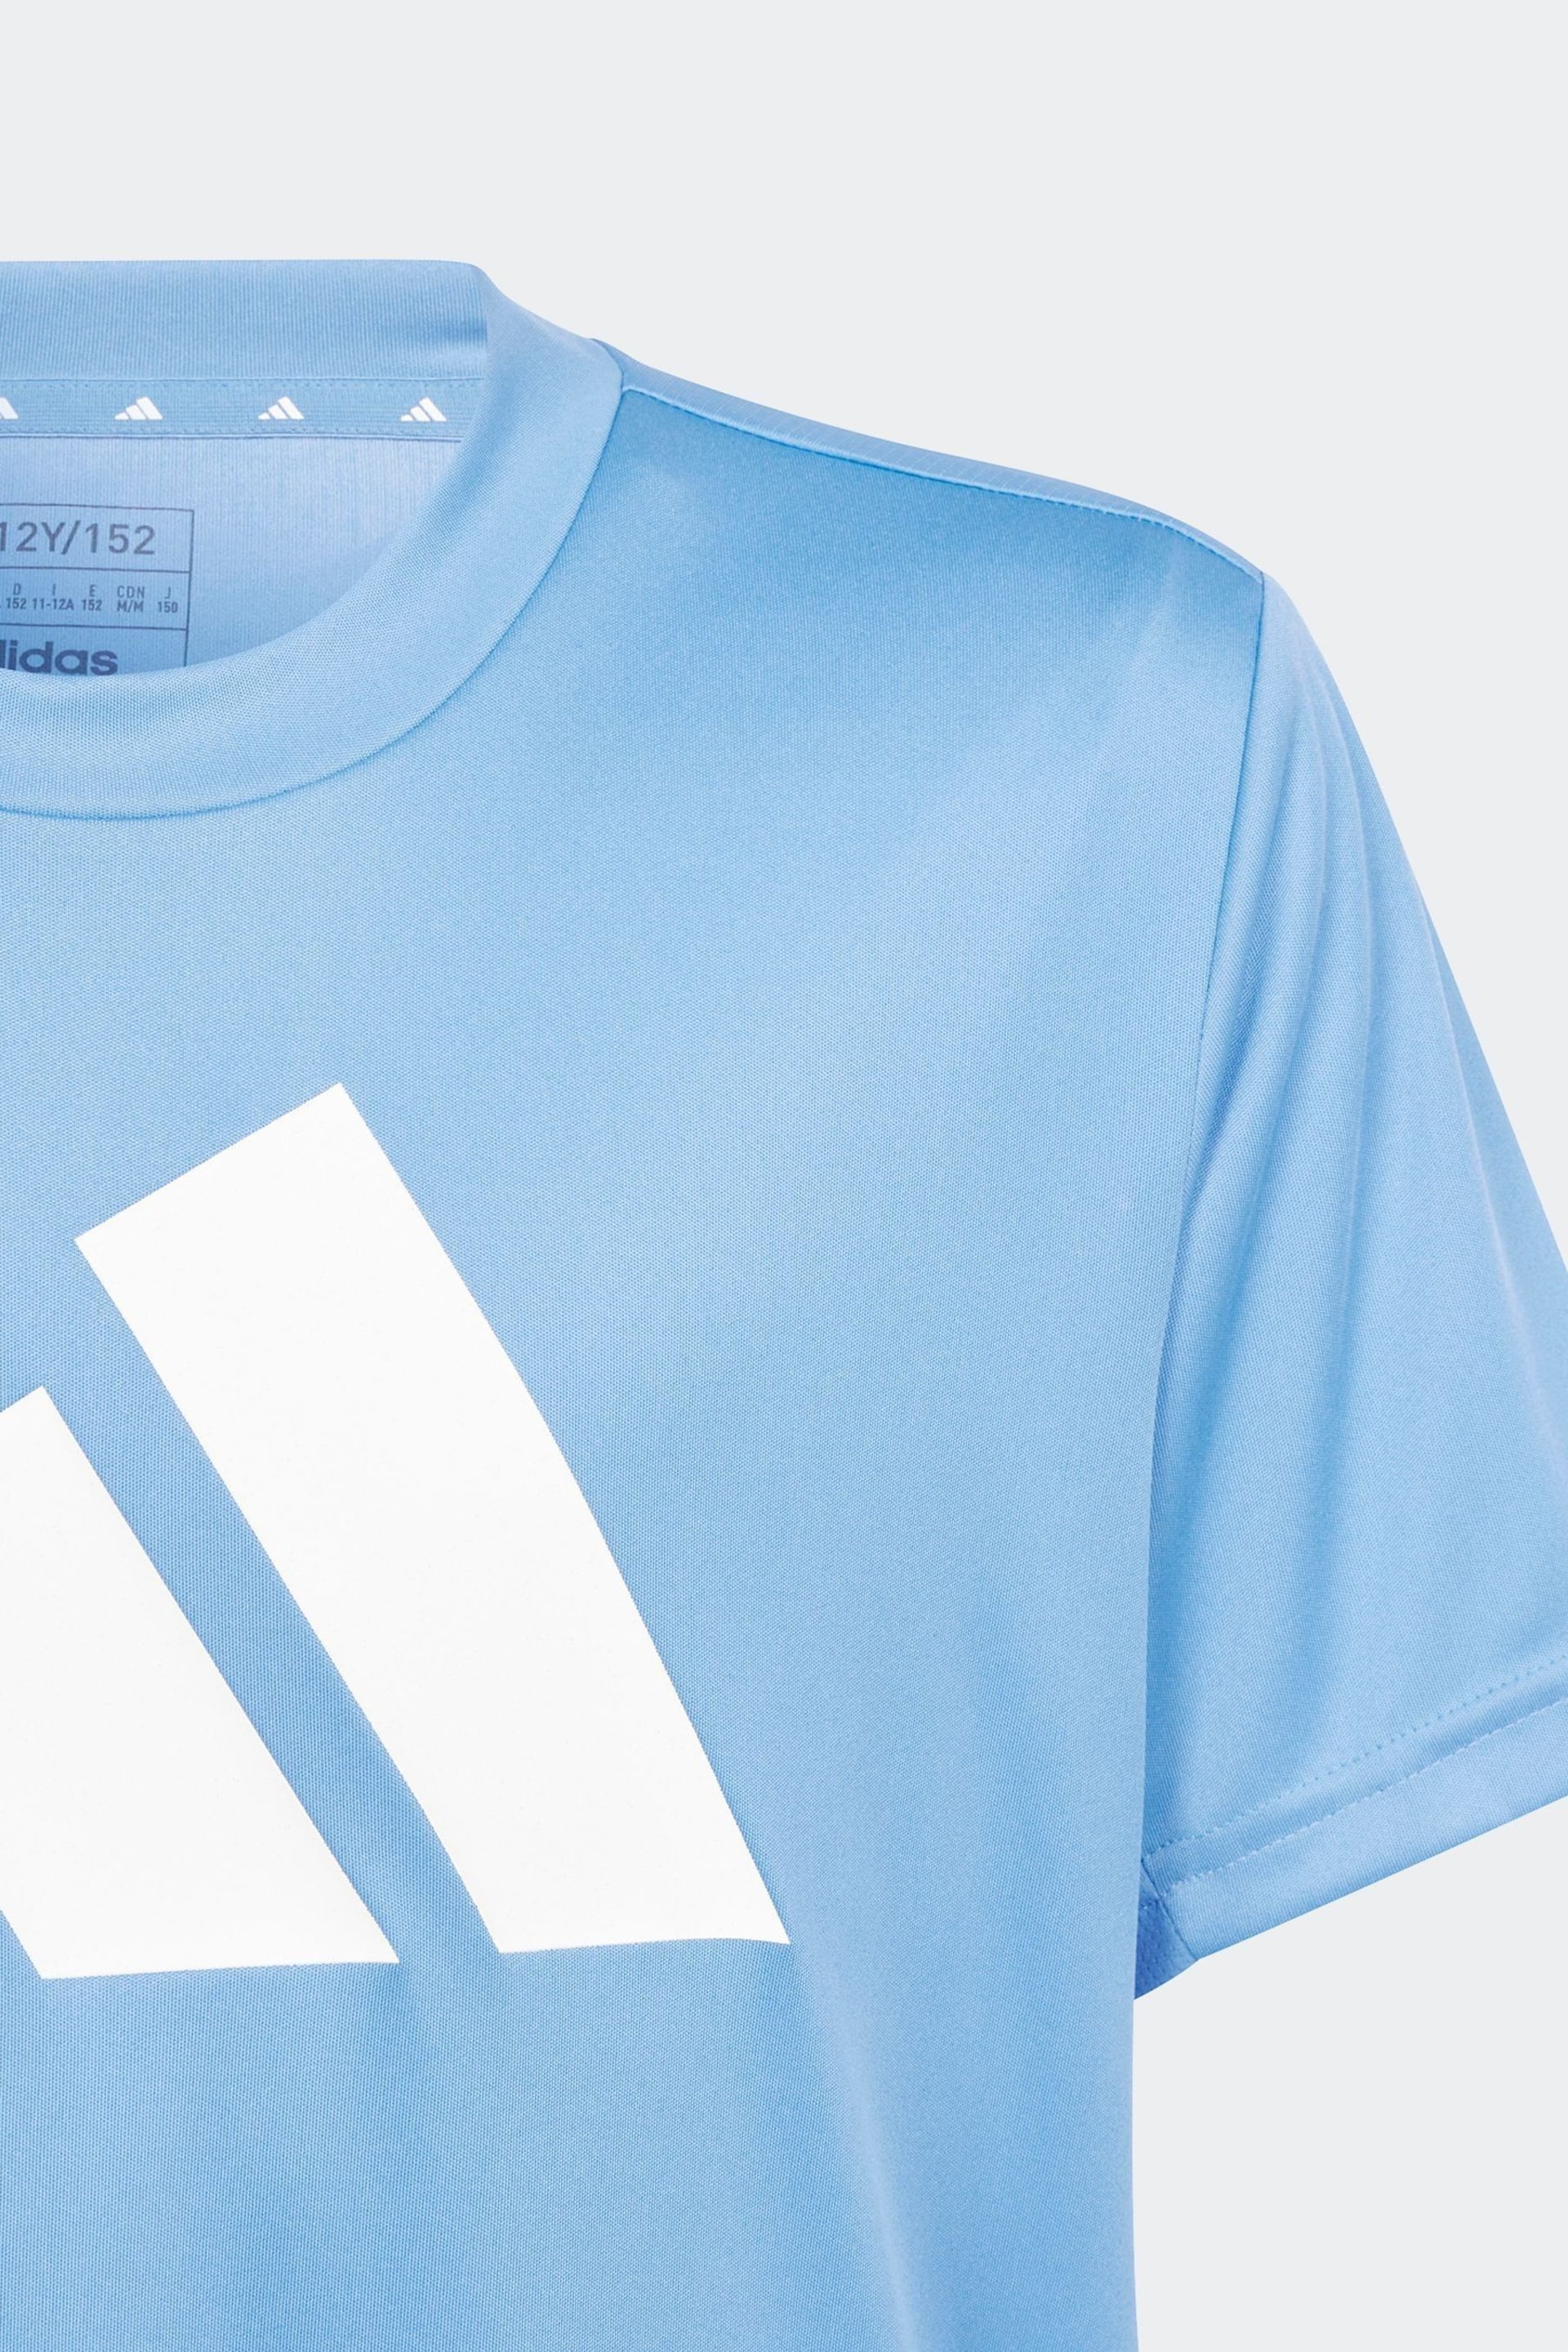 adidas Blue Regular Fit Sportswear Train Essentials Aeroready Logo T-Shirt - Image 3 of 5